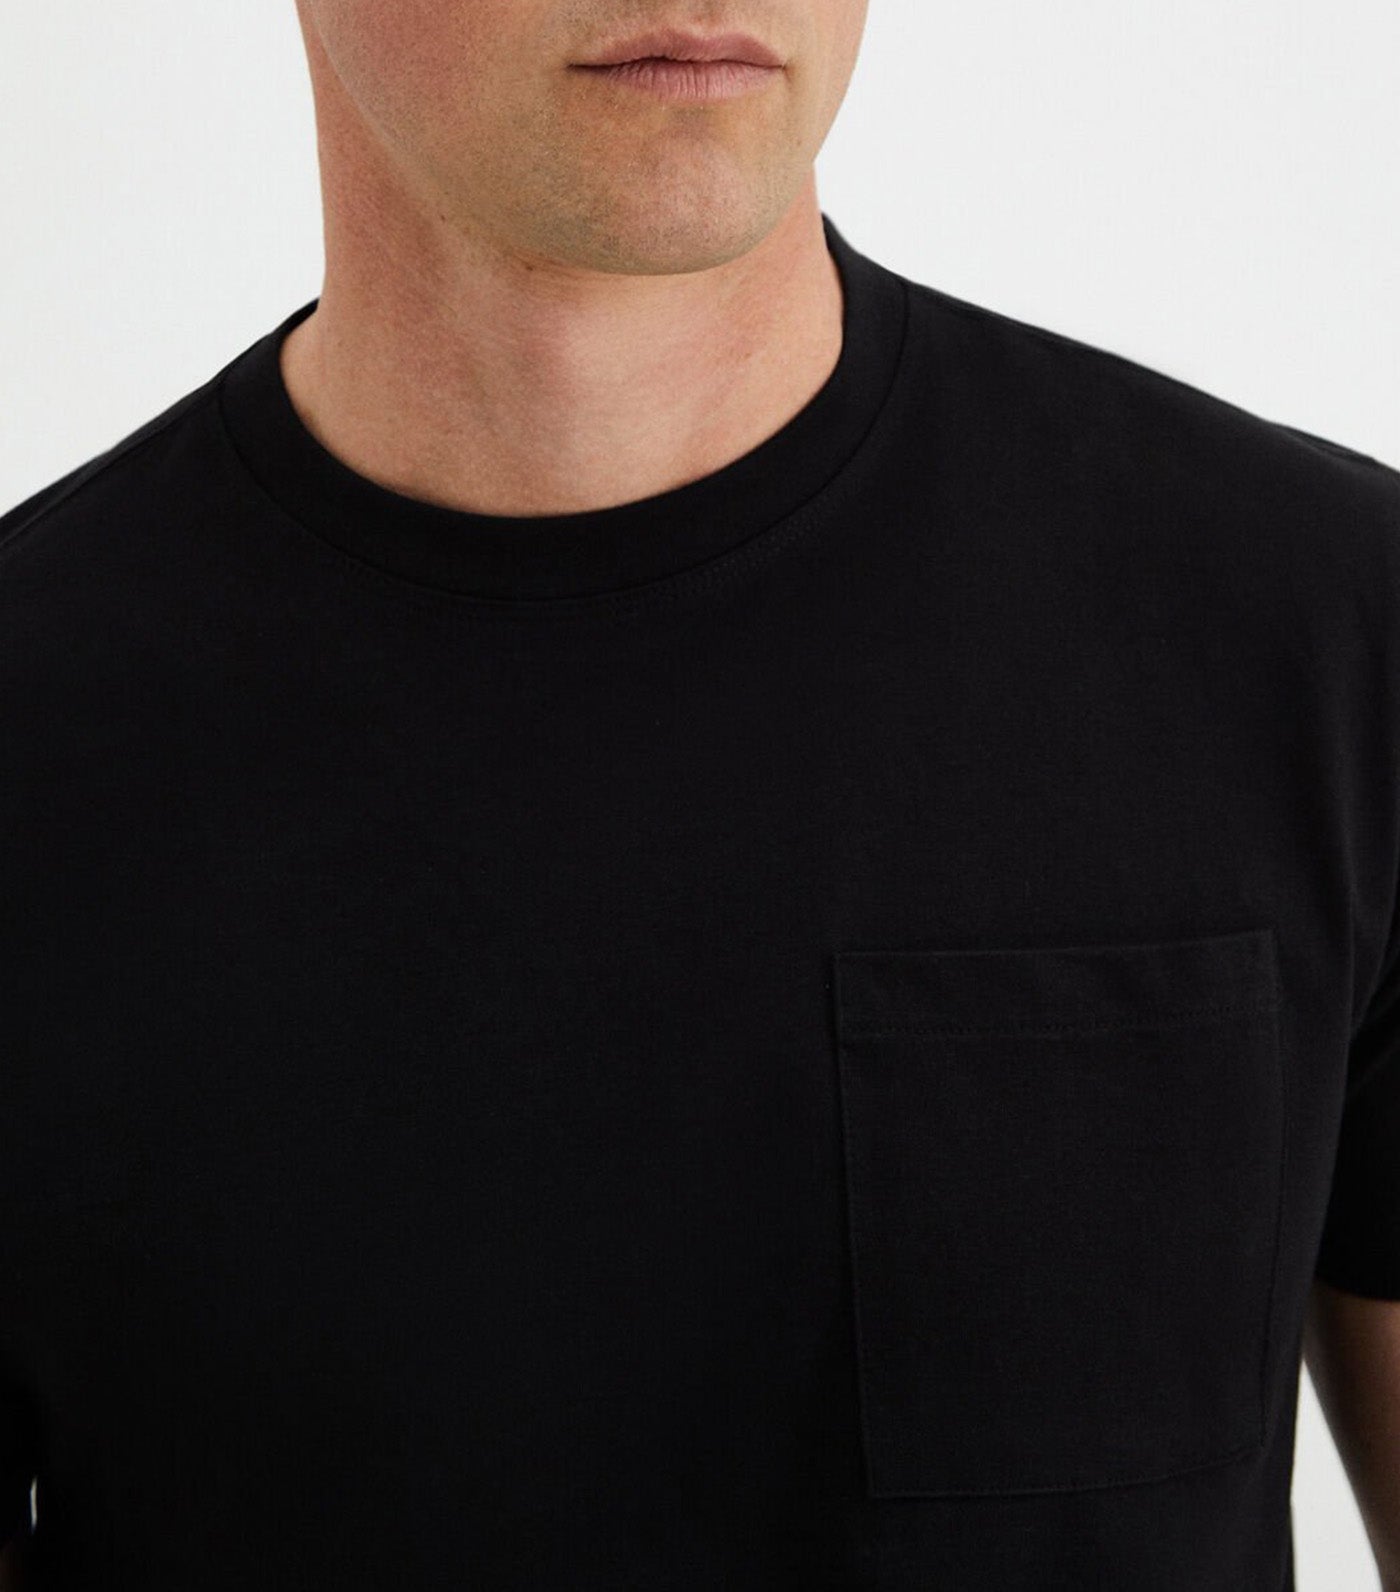 Crew Neck T-shirt with Pocket Black